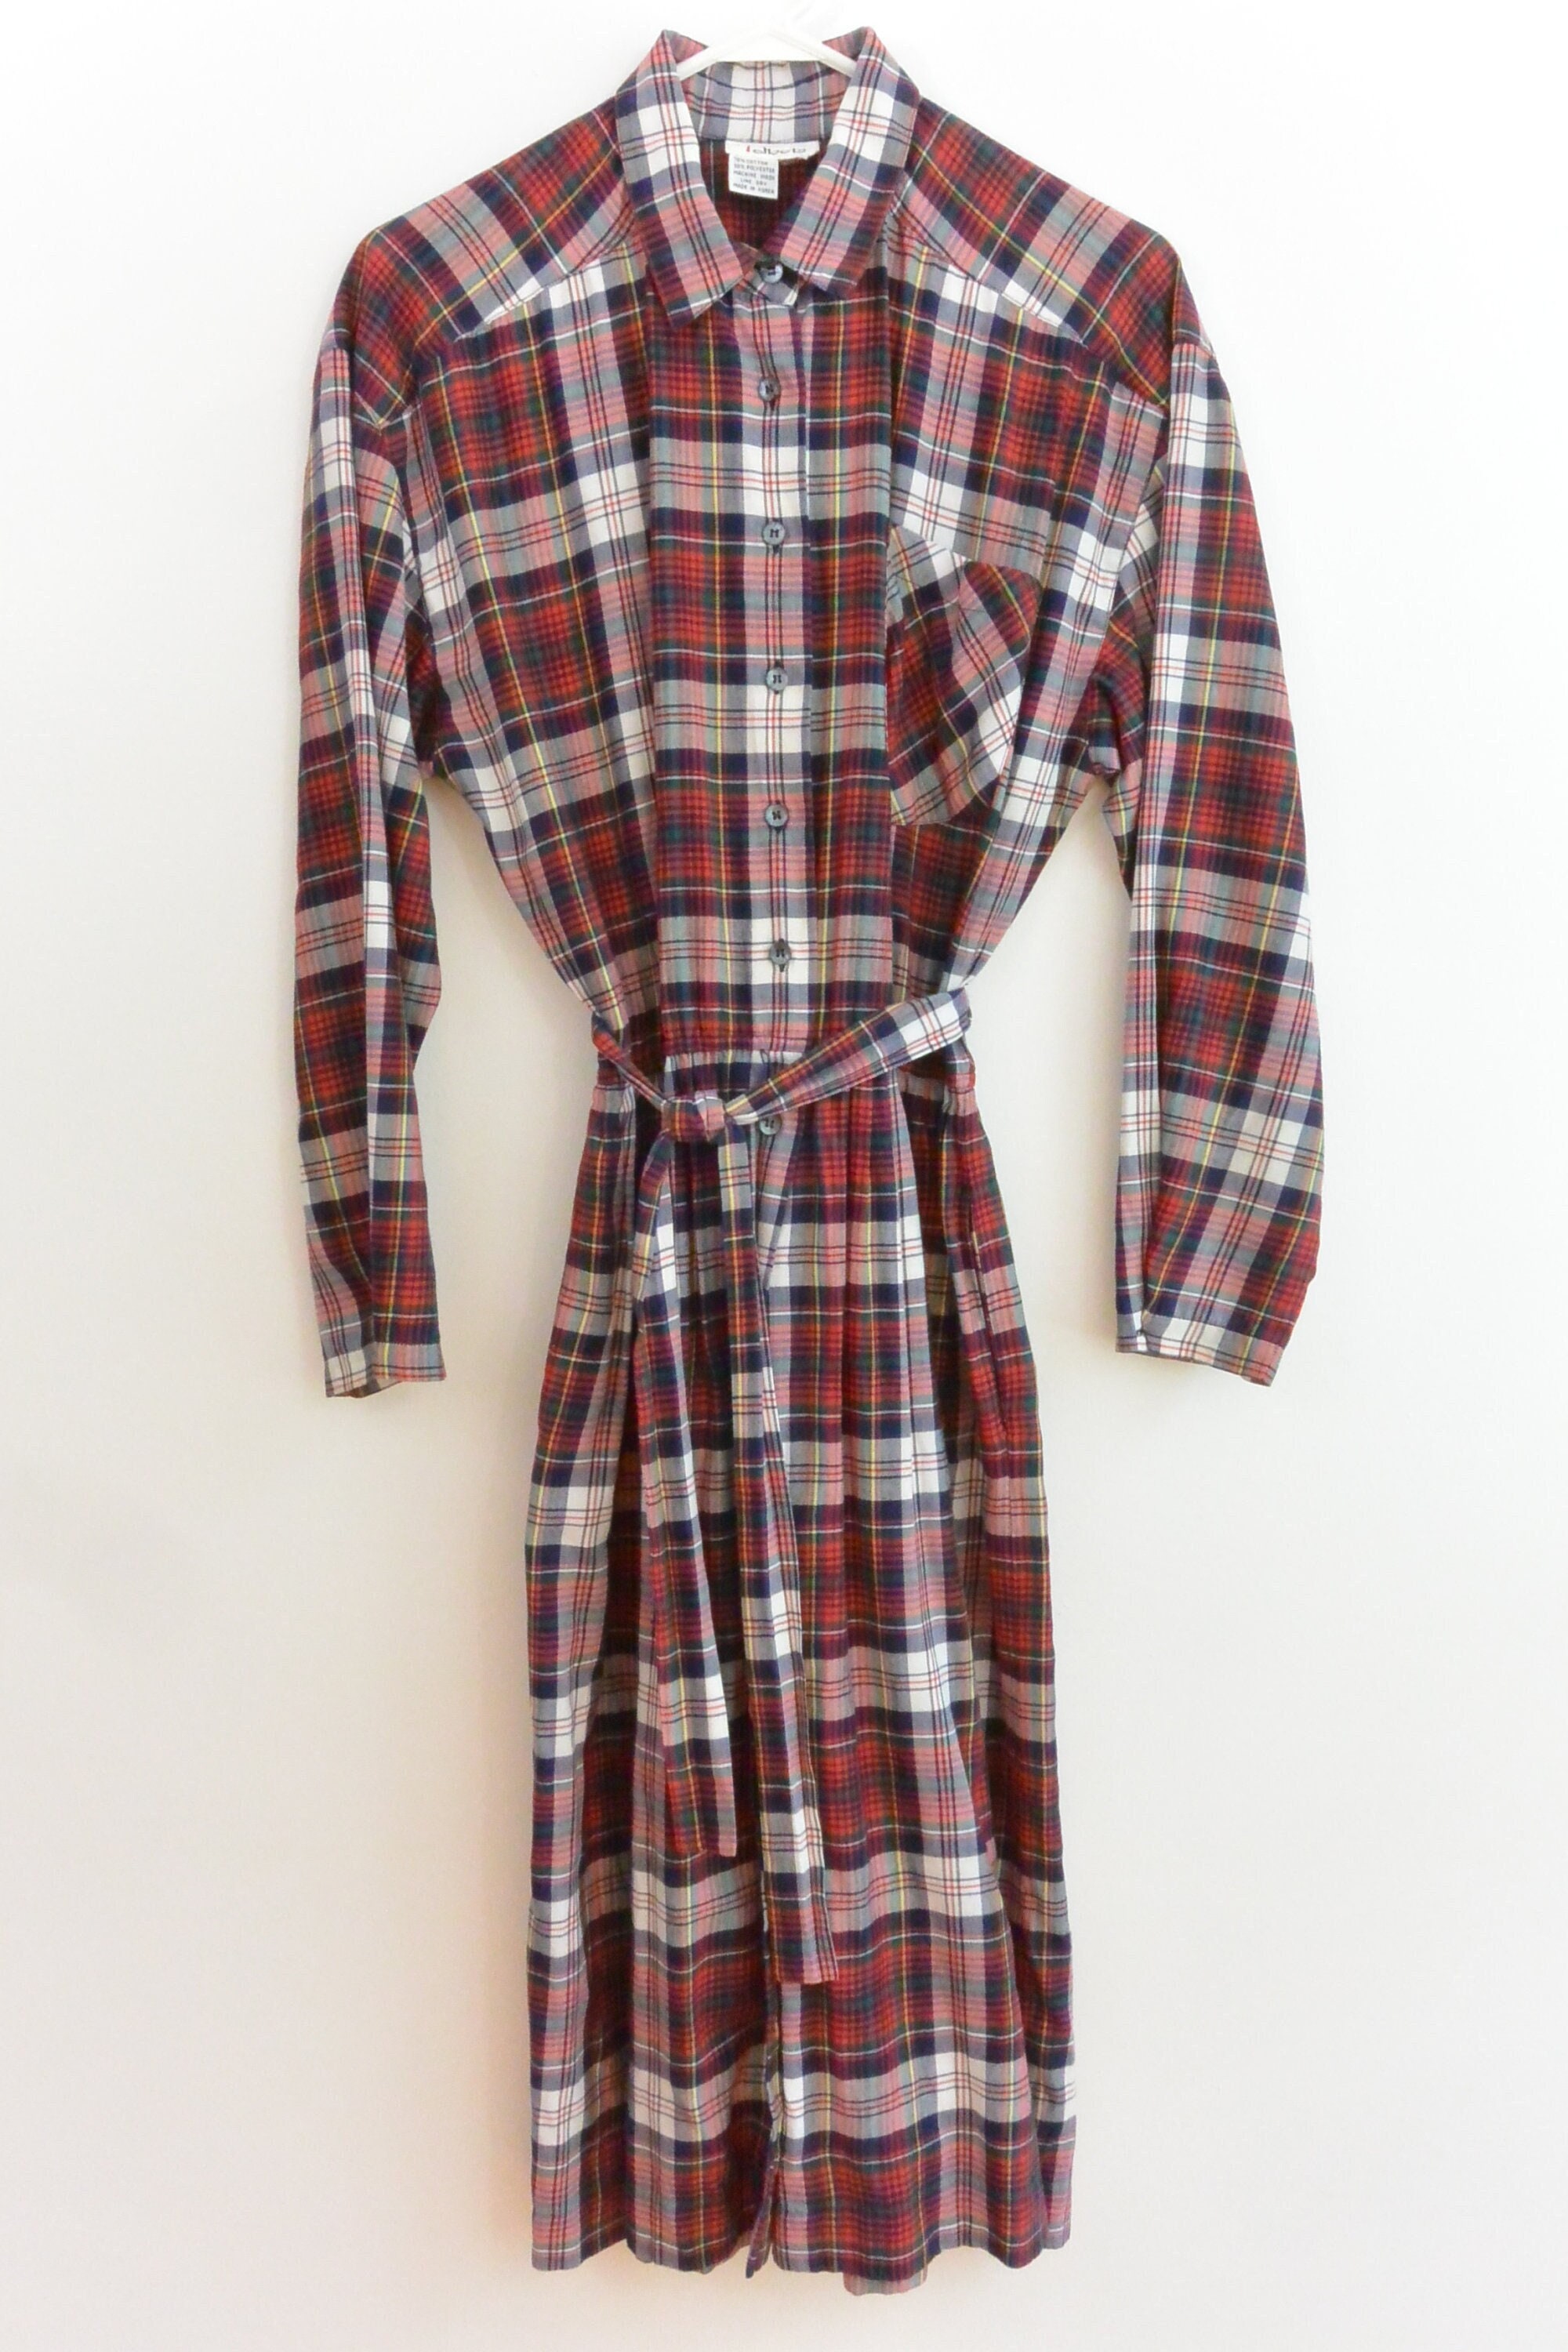 Vintage Plaid Cotton Blend Shirt Dress, Midi Medium-Large, Rustic Clothing, Cabincore, Mori Girl, Earthy Button Front Dress